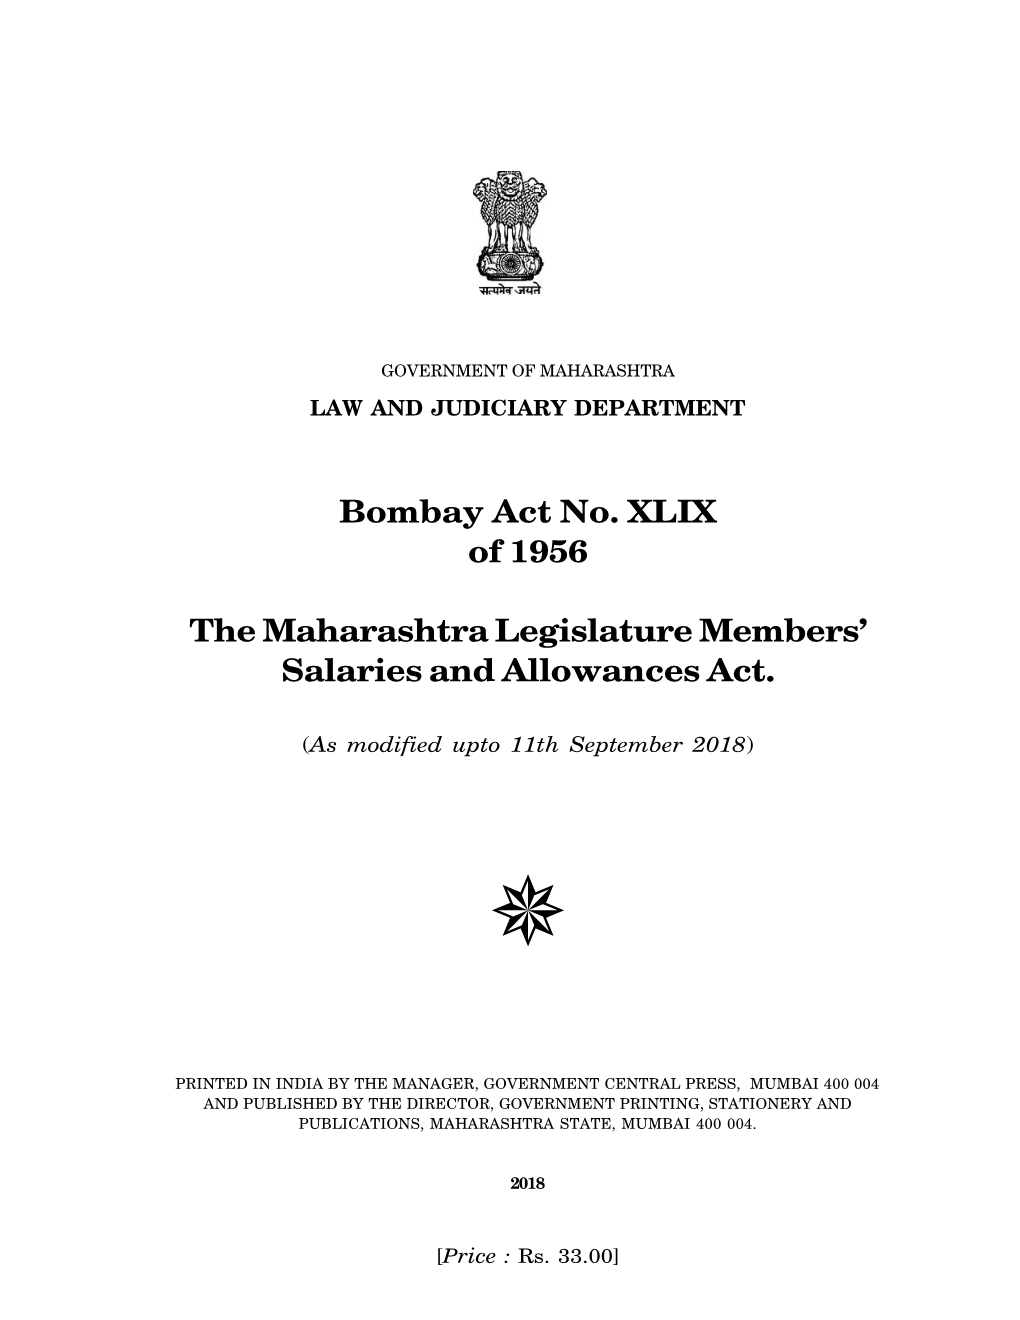 Bombay Act No. XLIX of 1956 the Maharashtra Legislature Members